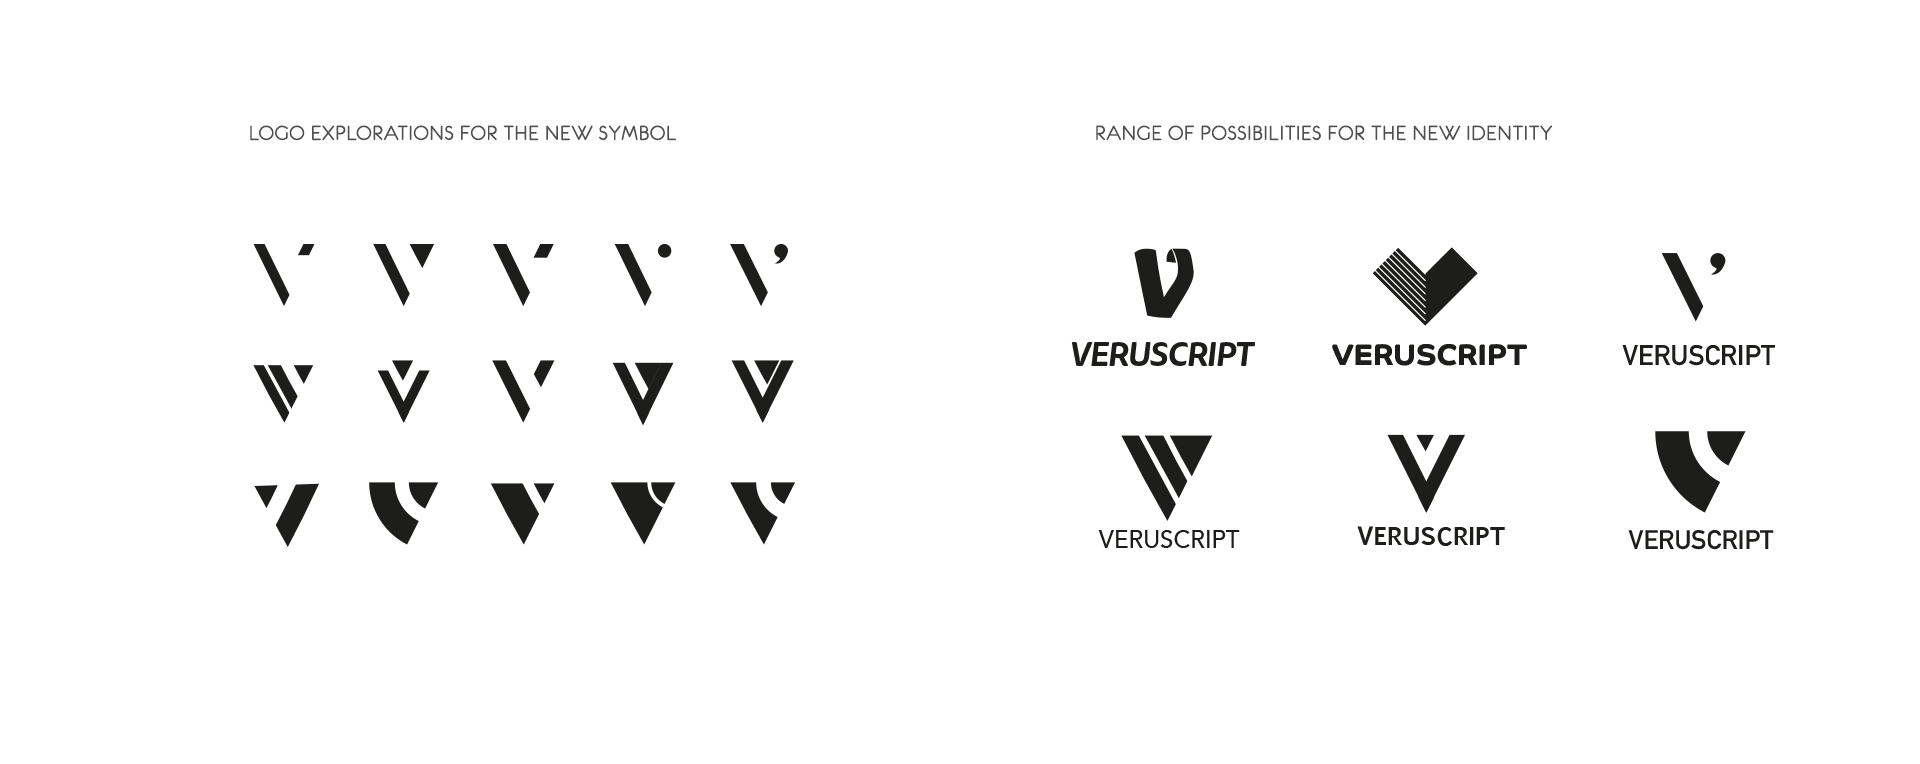 Veruscript Logo